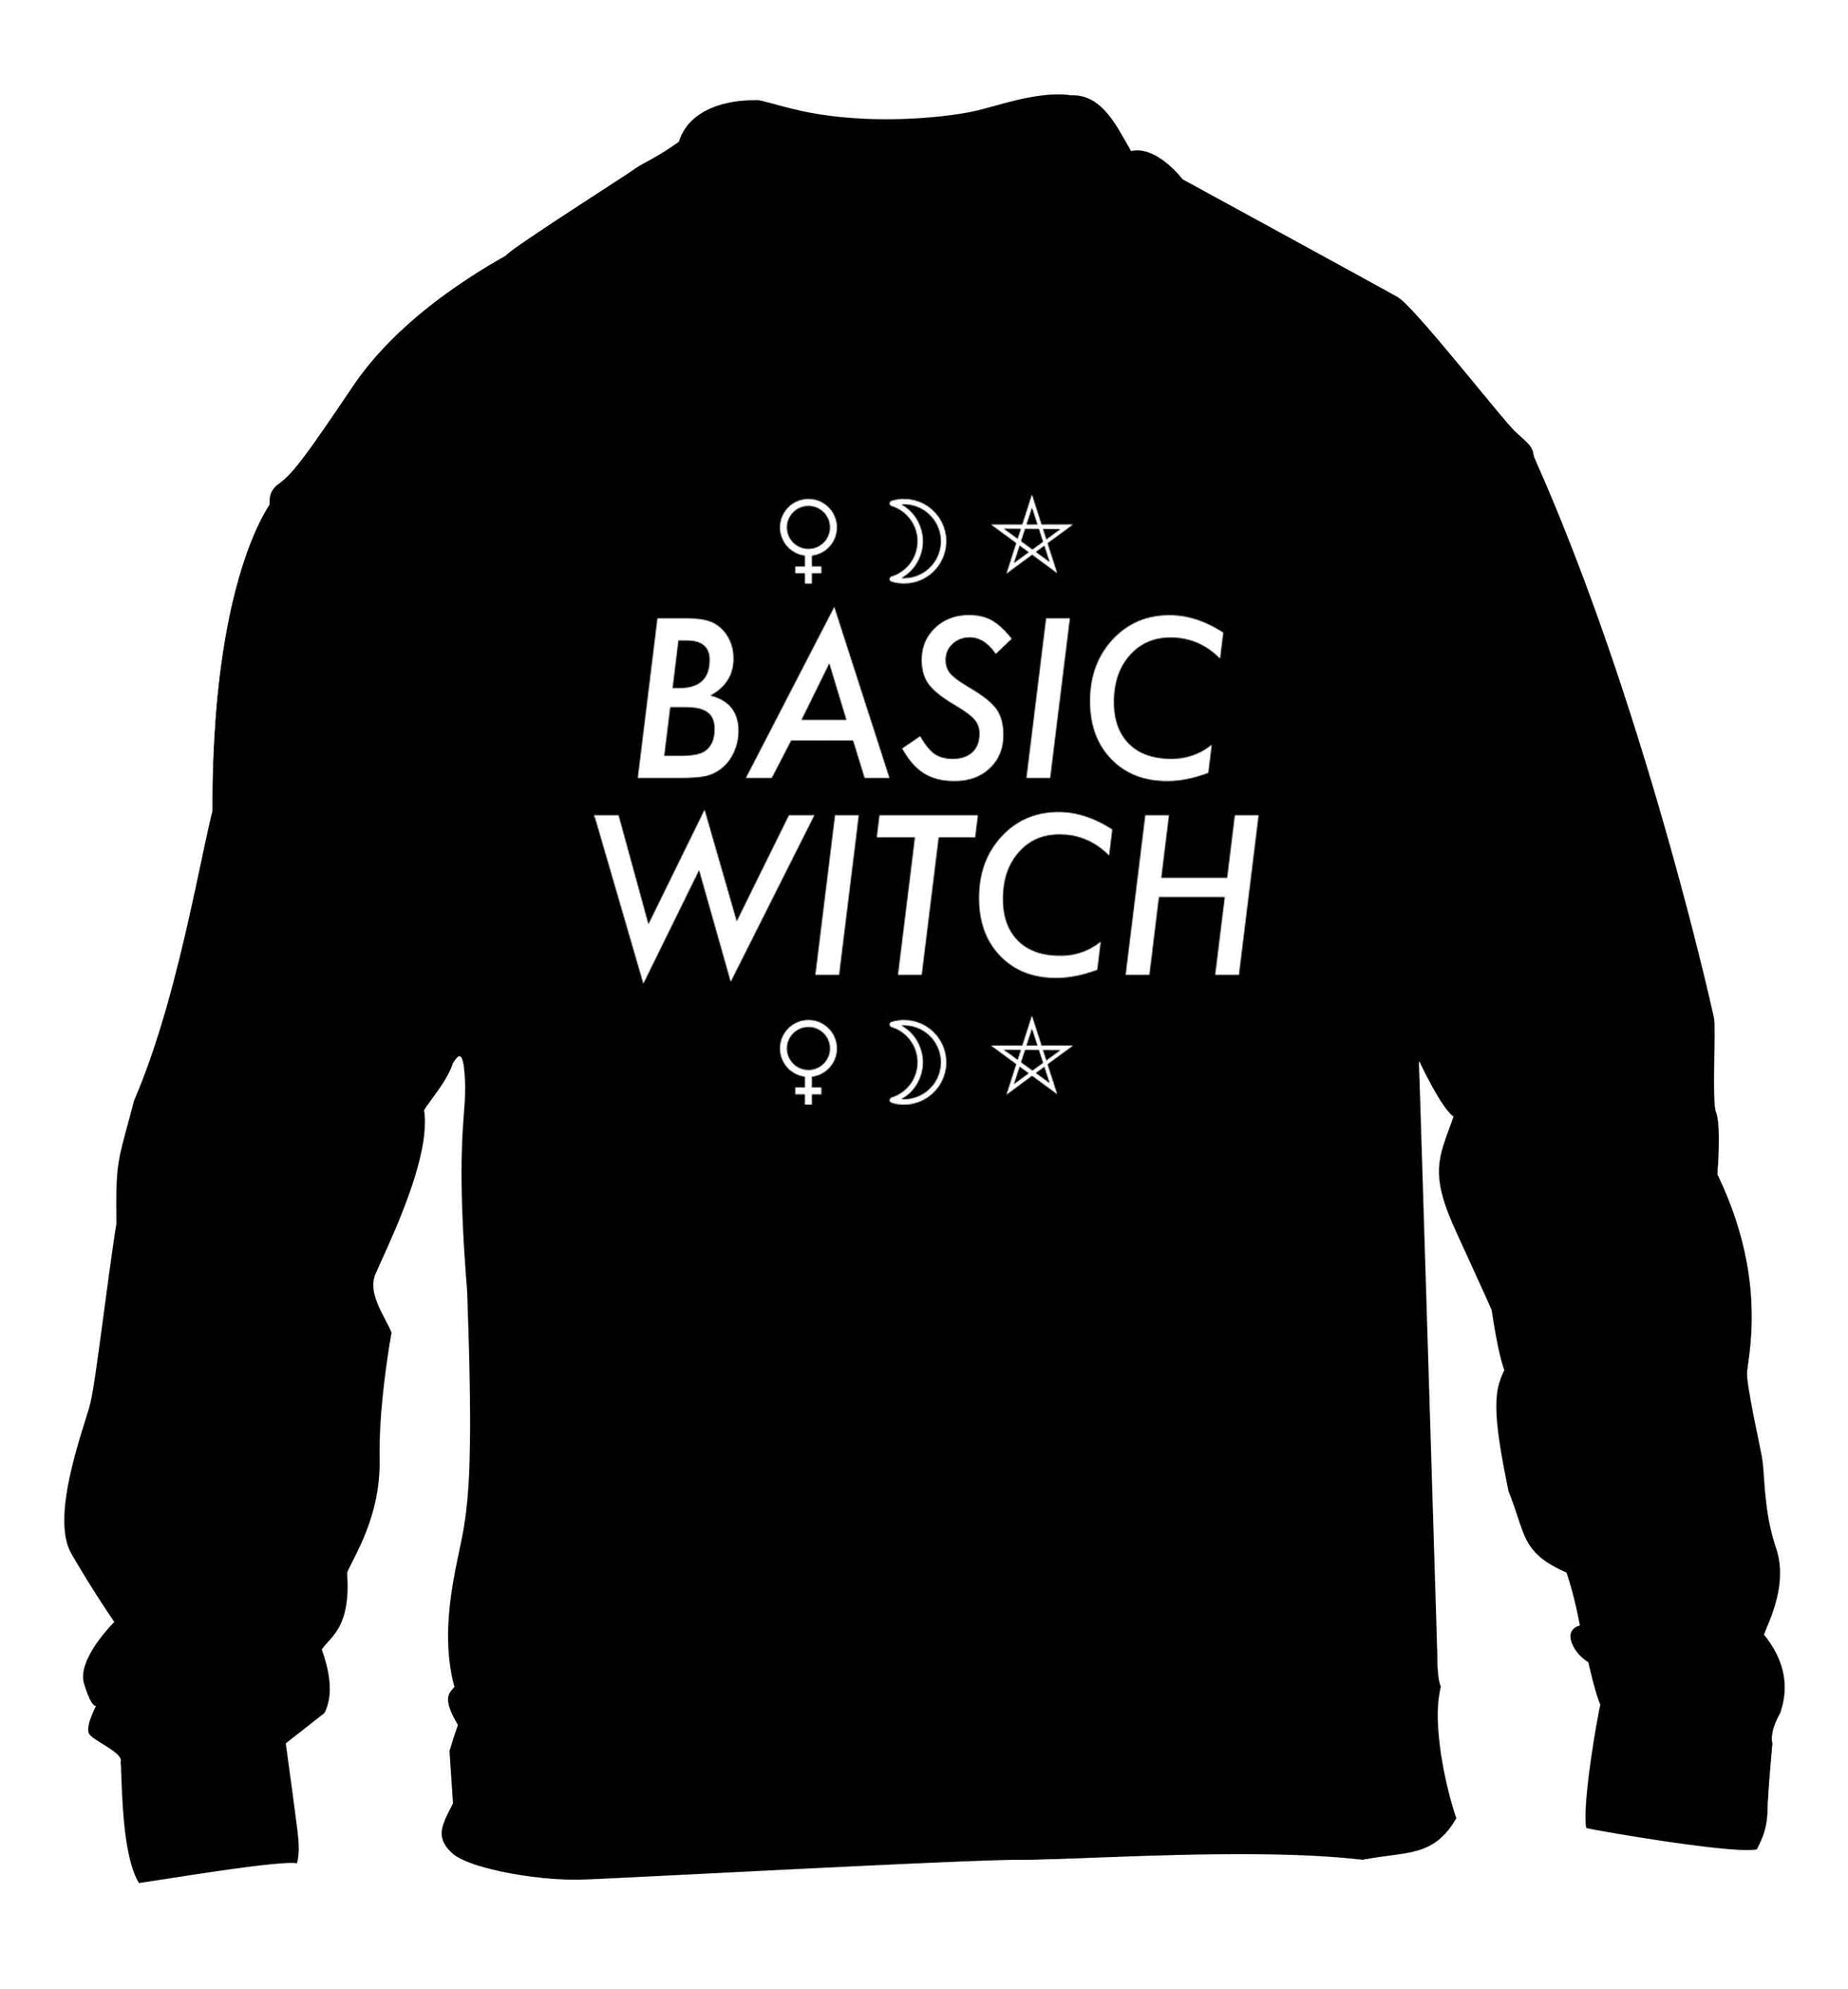 Basic witch 1 children's black sweater 12-13 Years